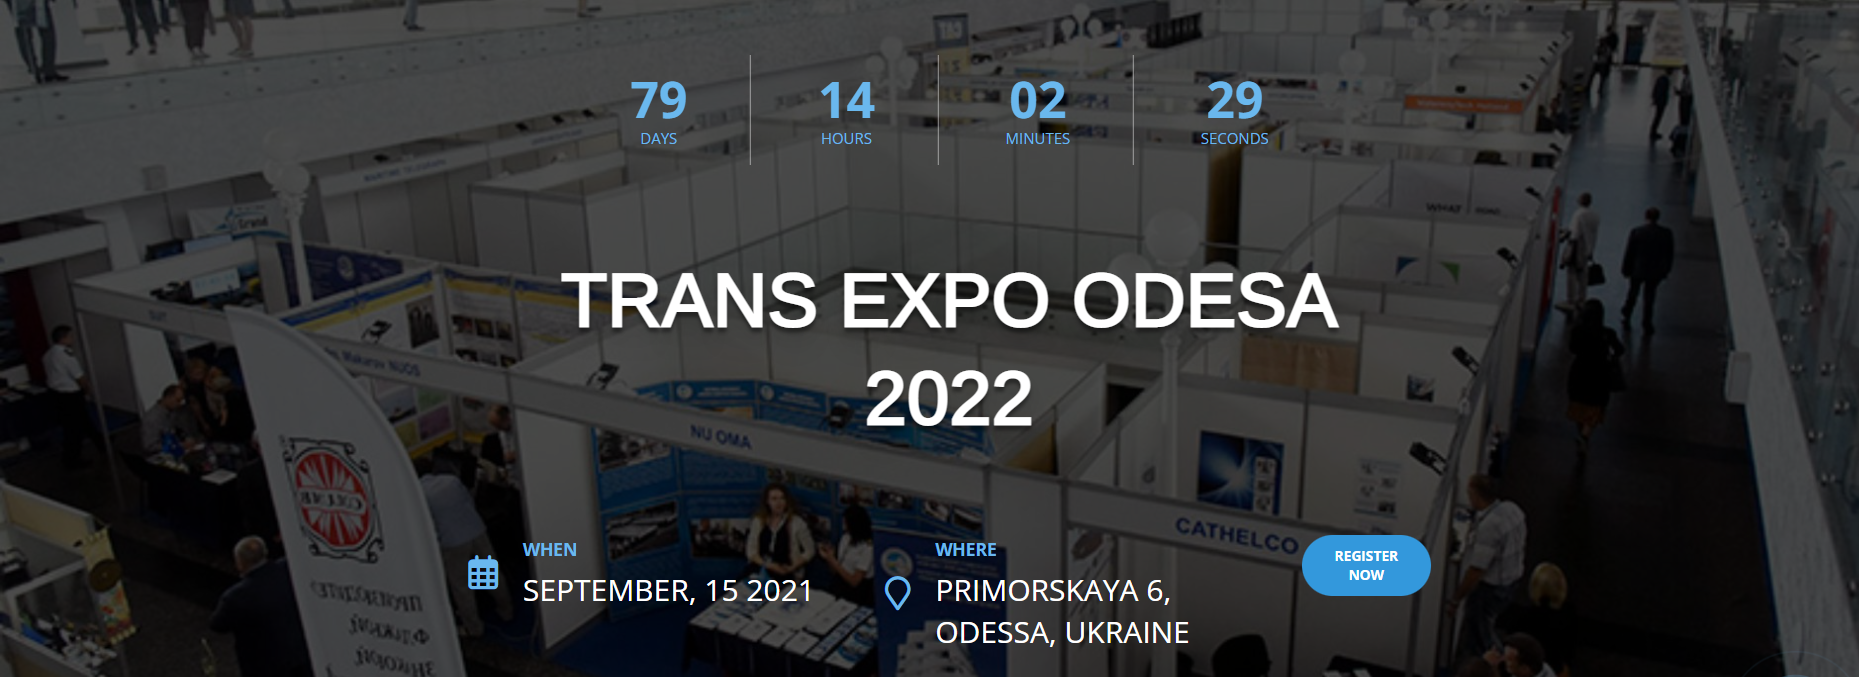 Expo Odessa 2022